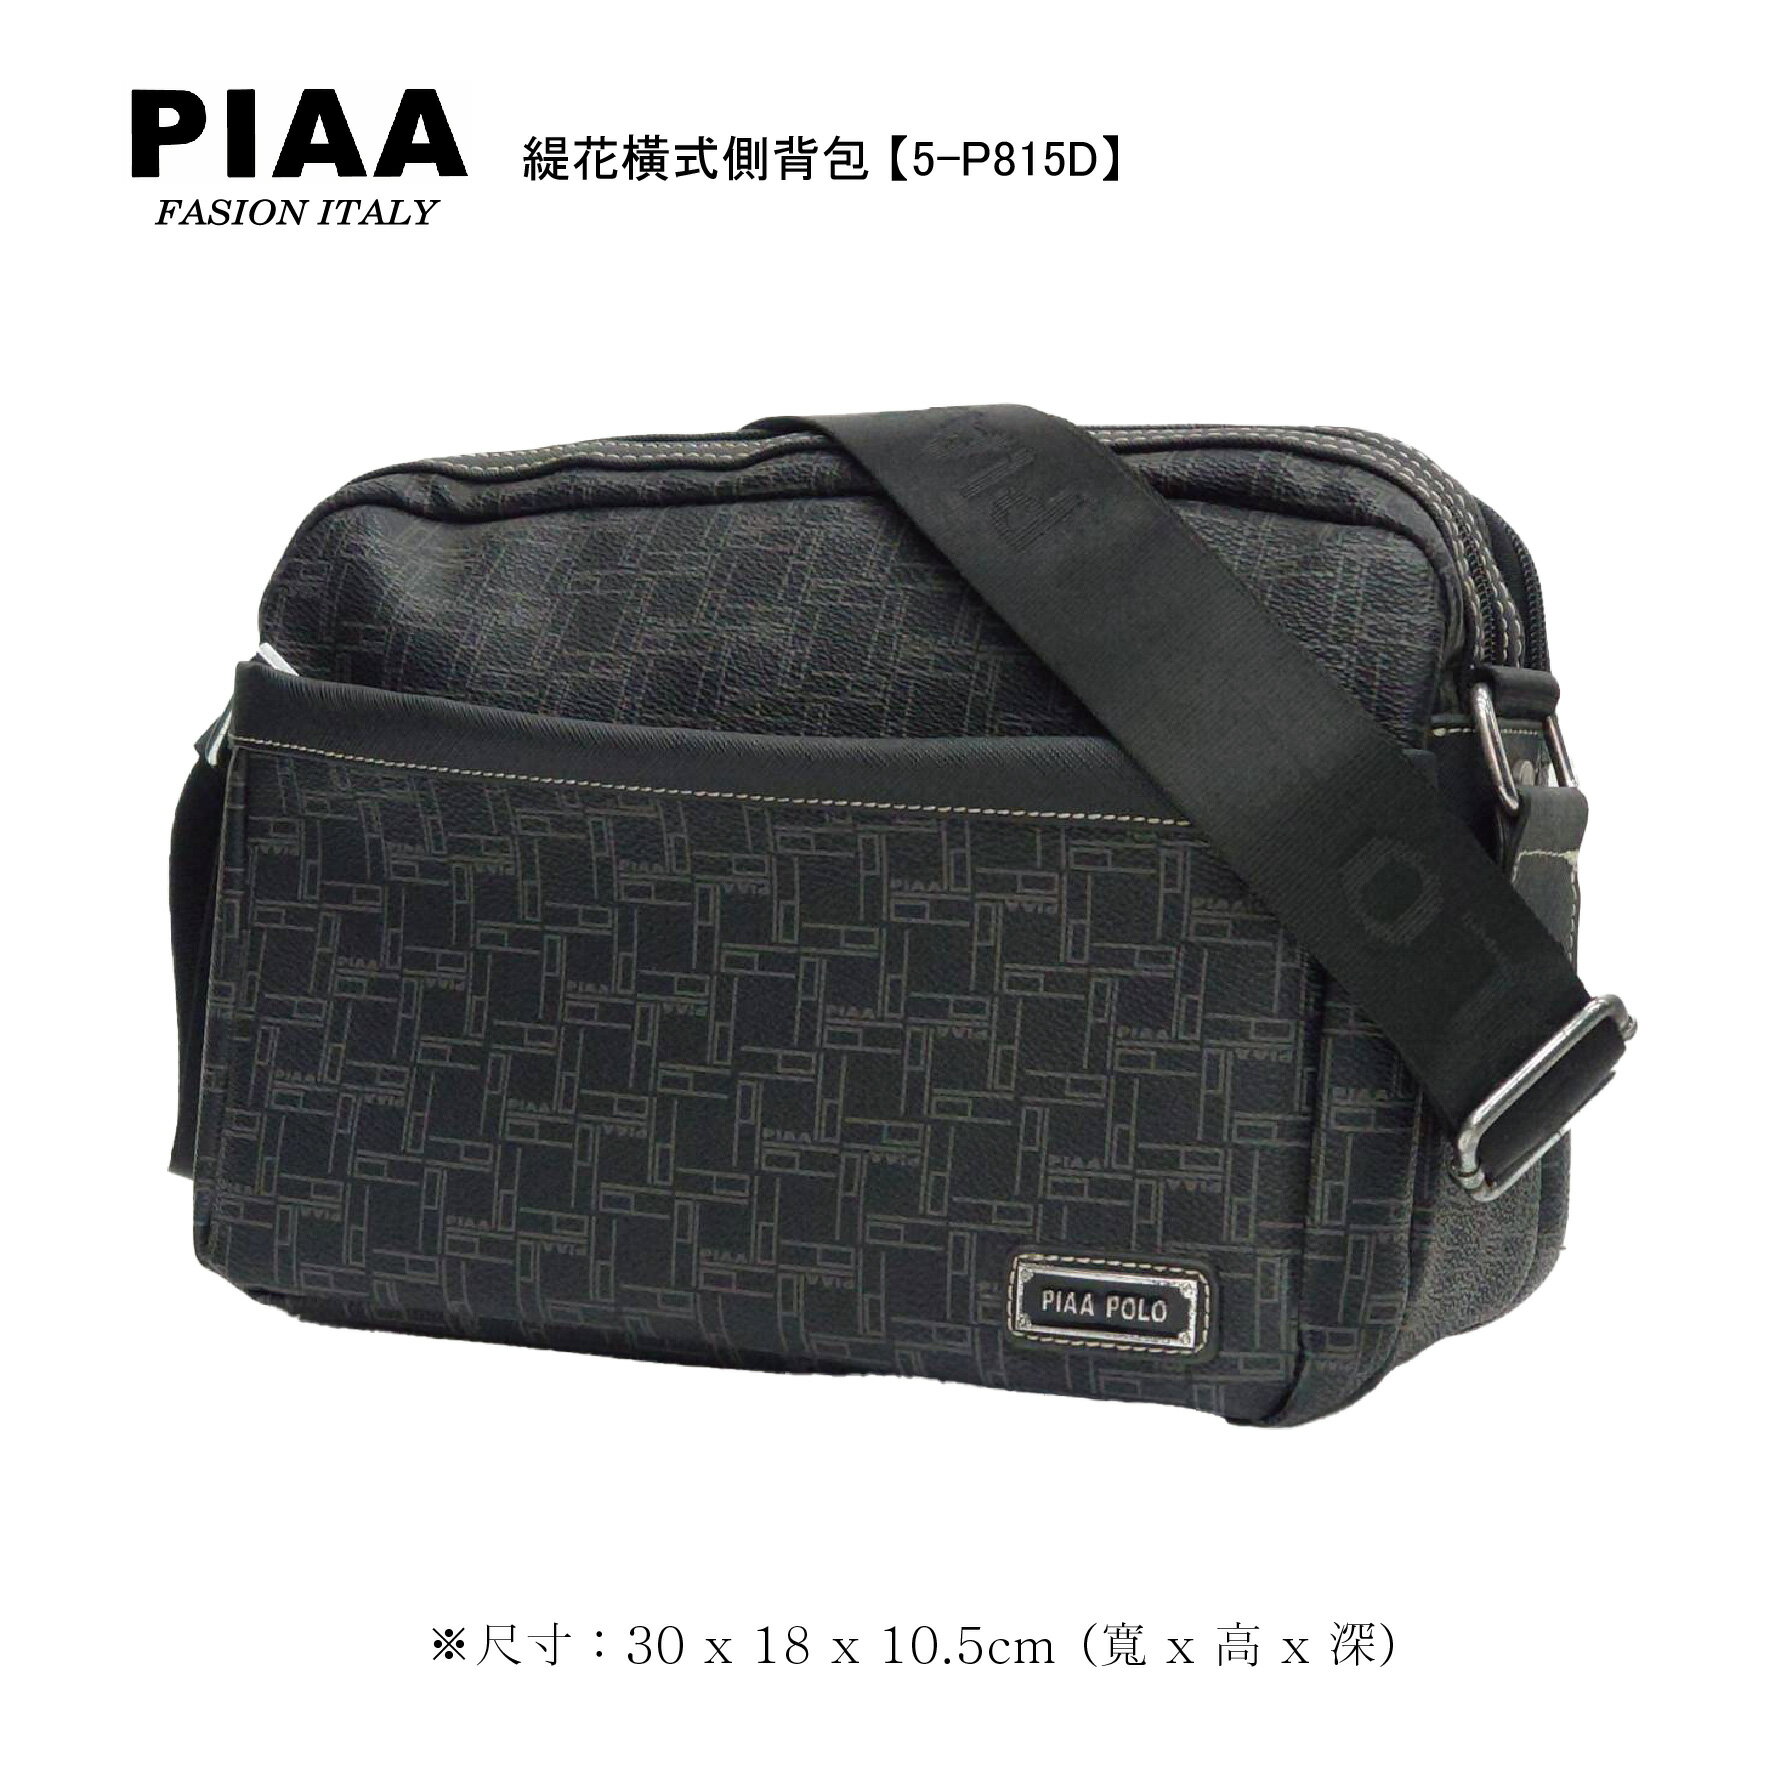 5-P815D【PIAA POLO 皮亞 保羅】緹花簡約橫式側背包